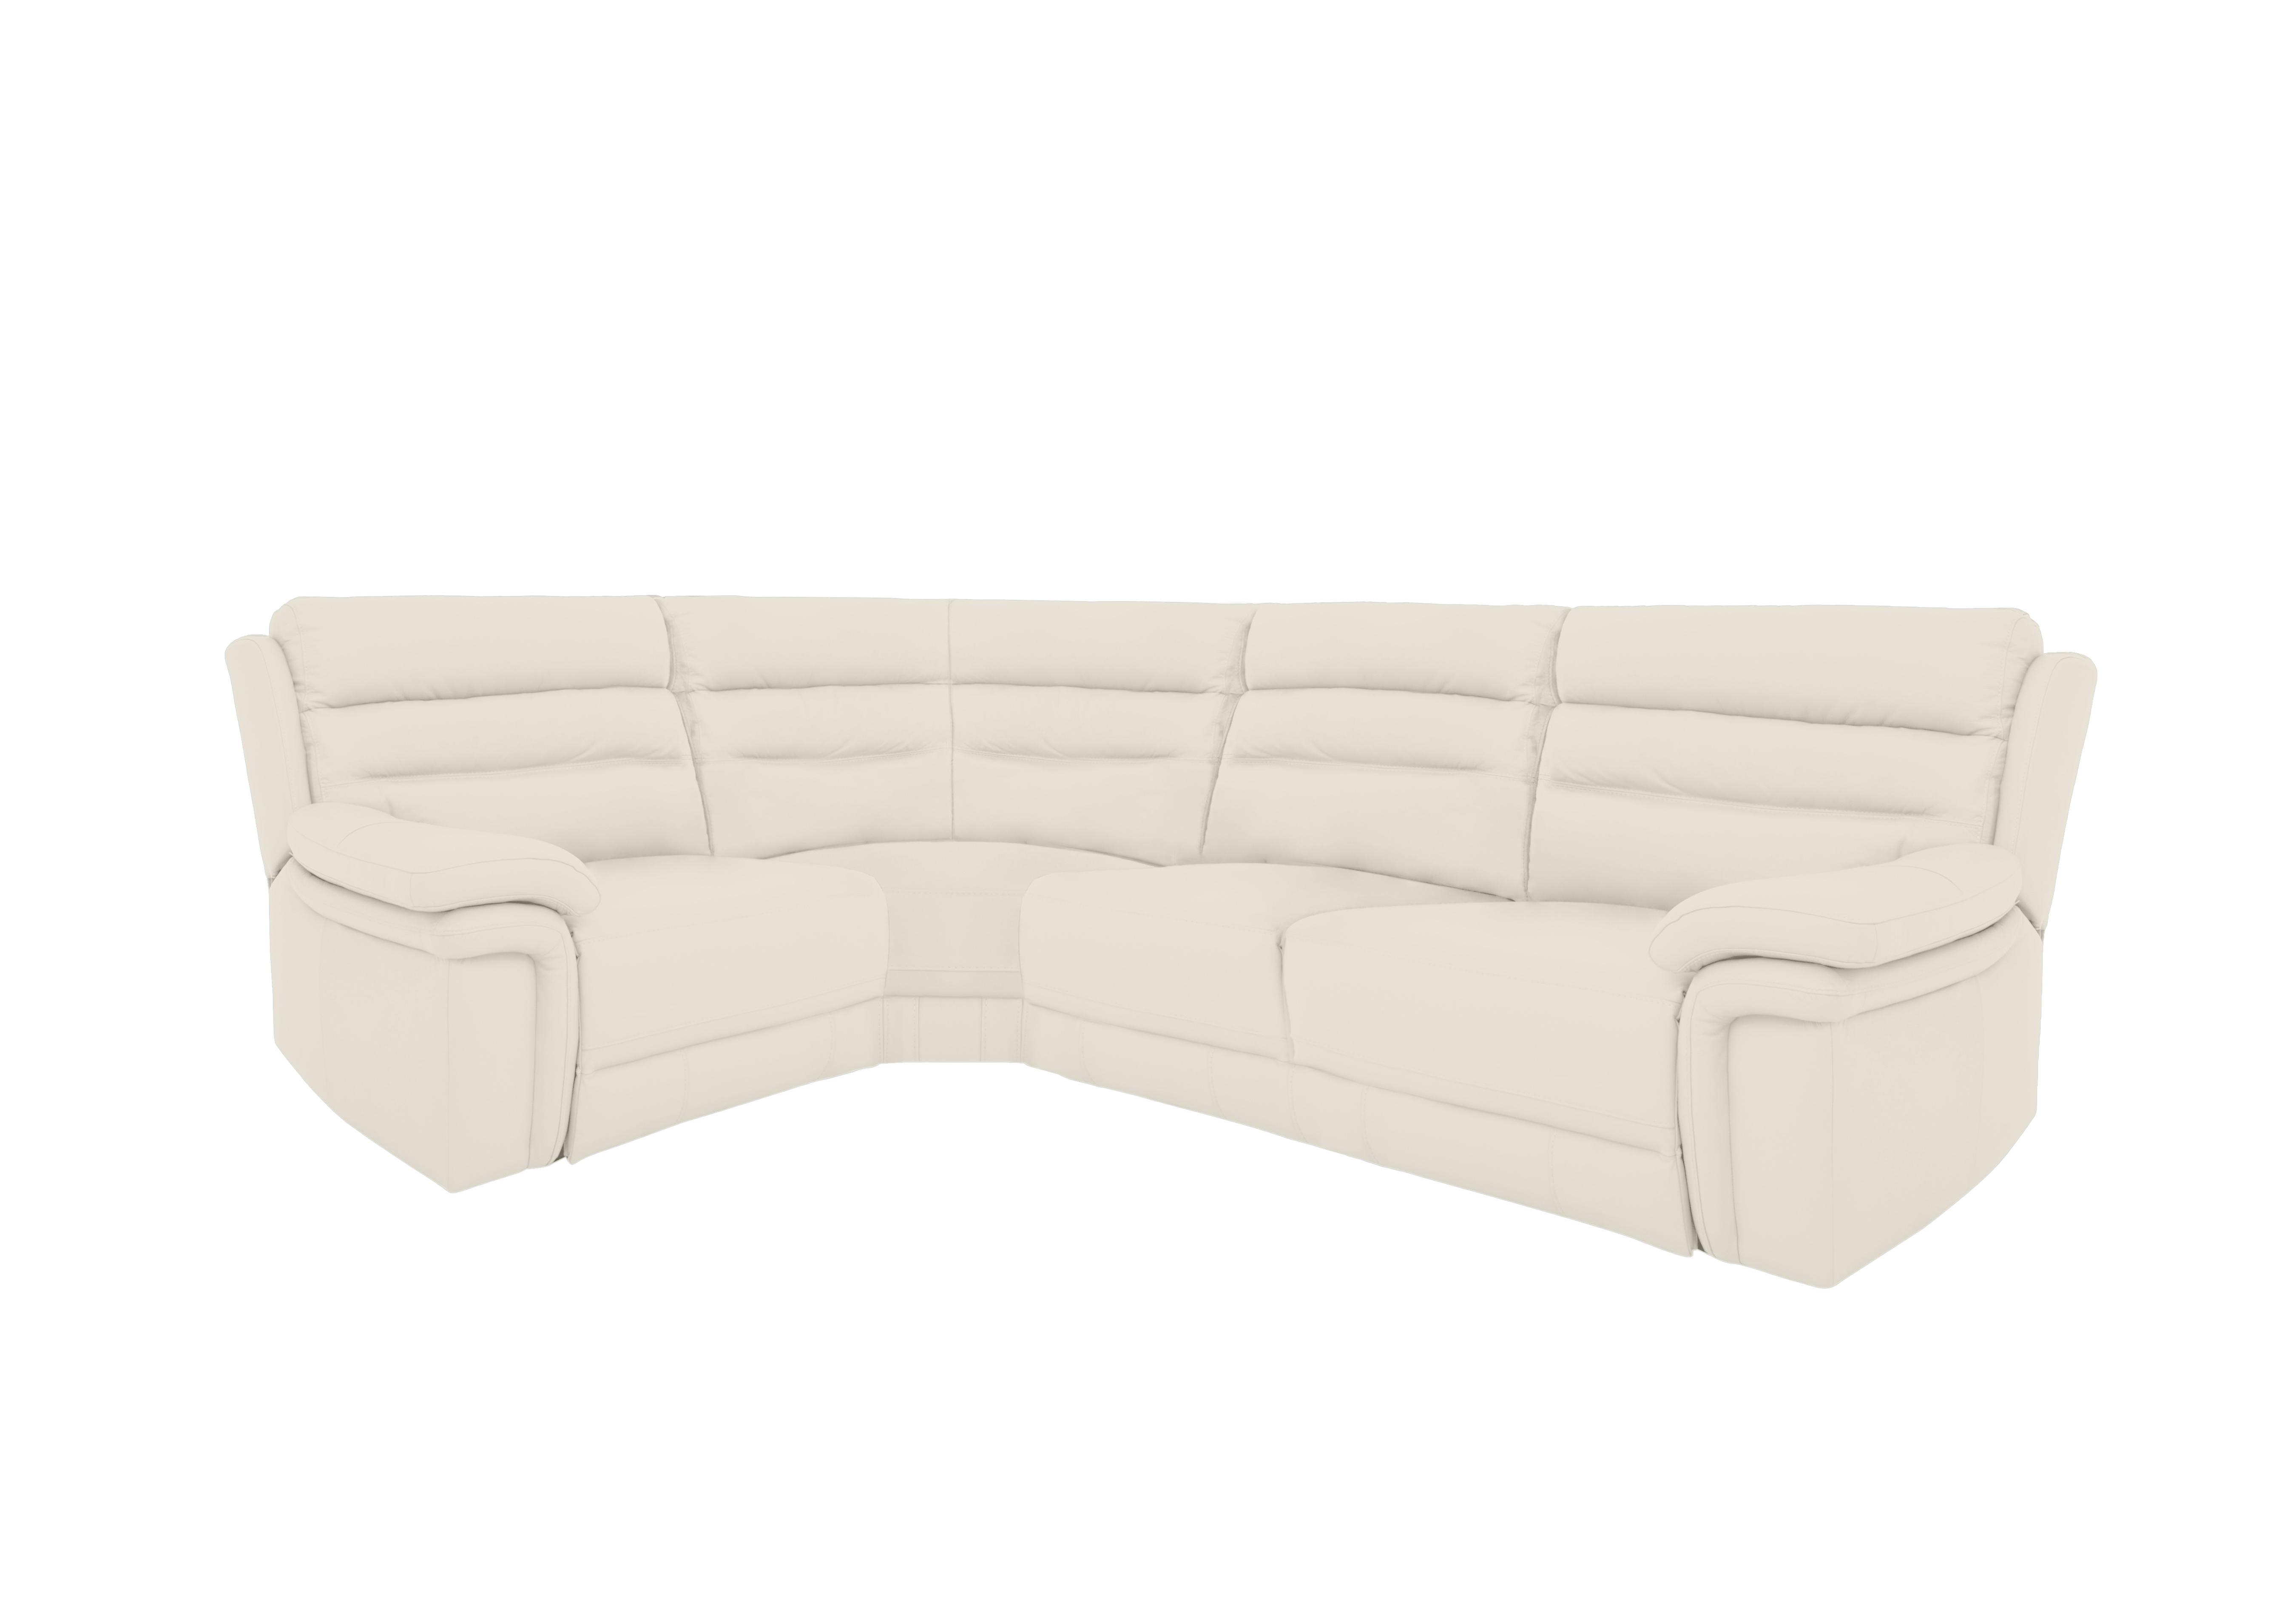 Berlin Modular Leather Corner Sofa in White Le-9307 on Furniture Village